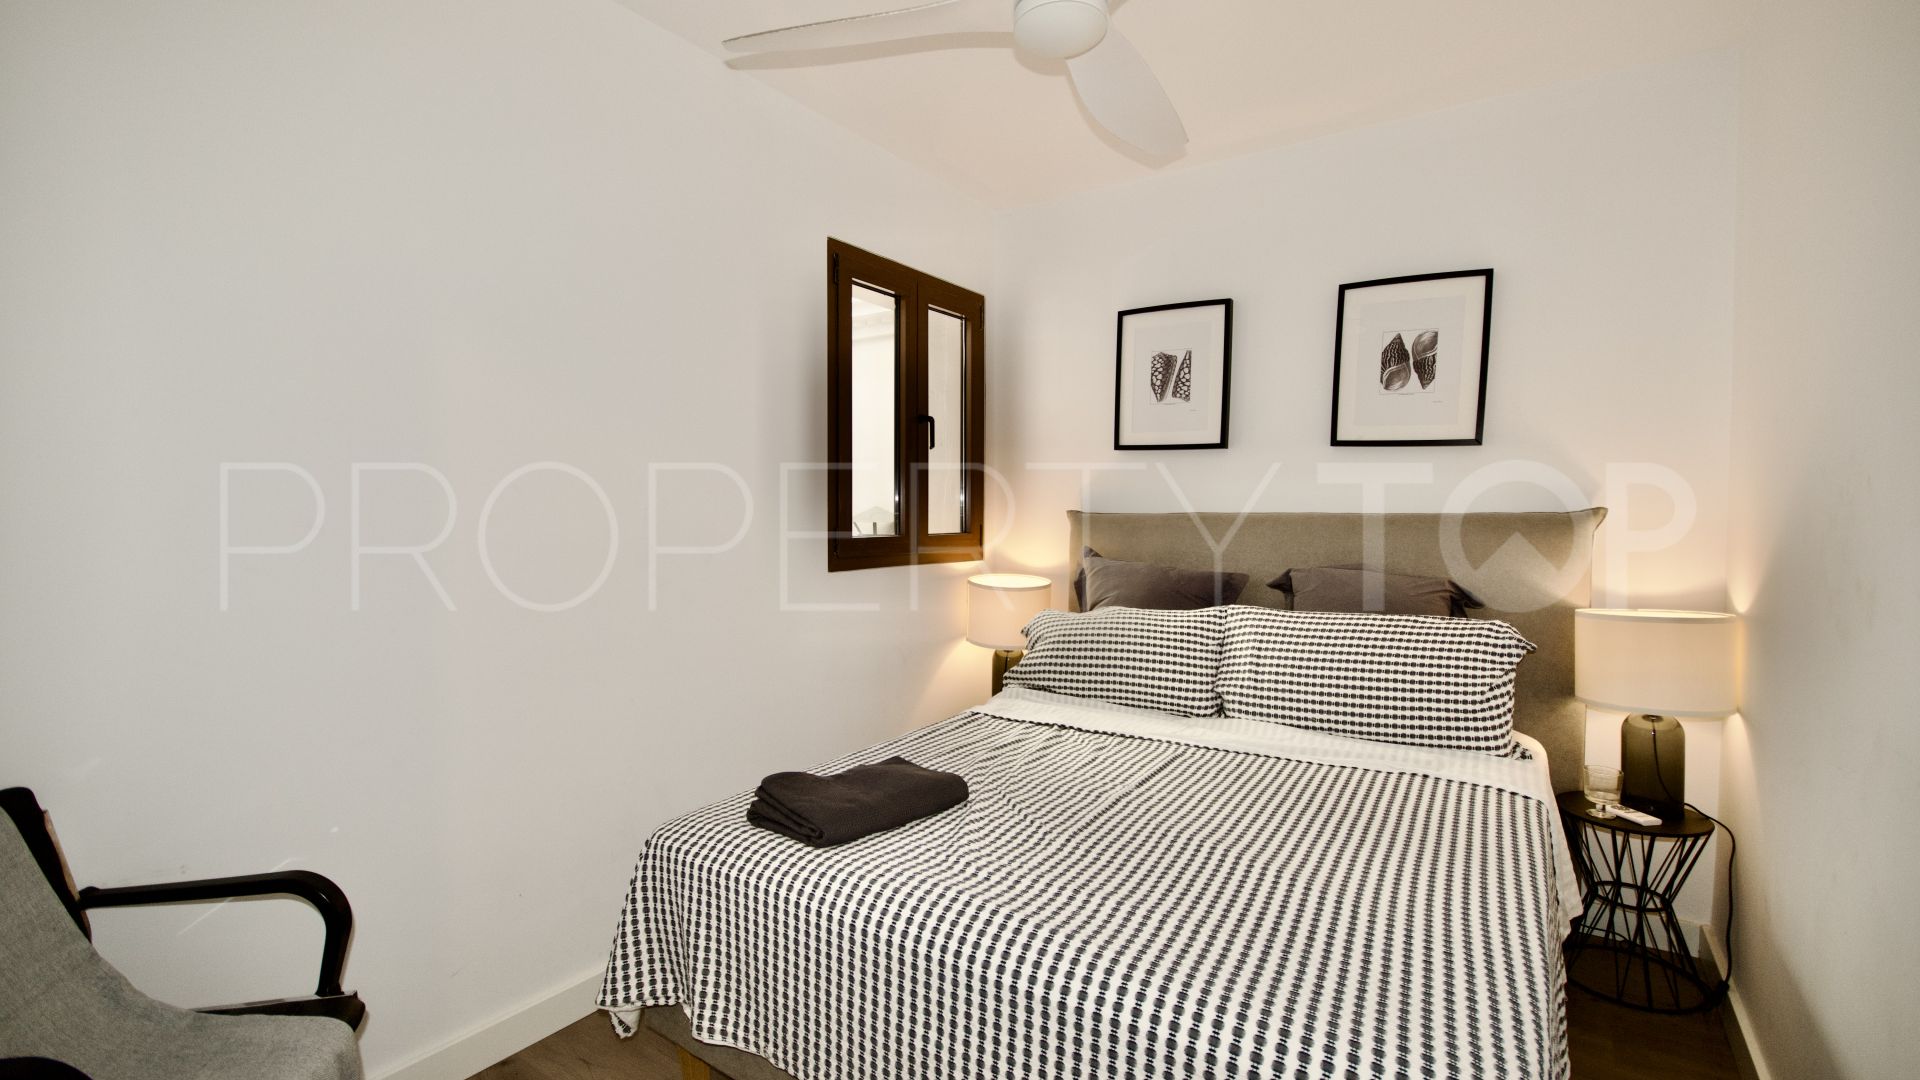 4 bedrooms duplex penthouse for sale in Manilva